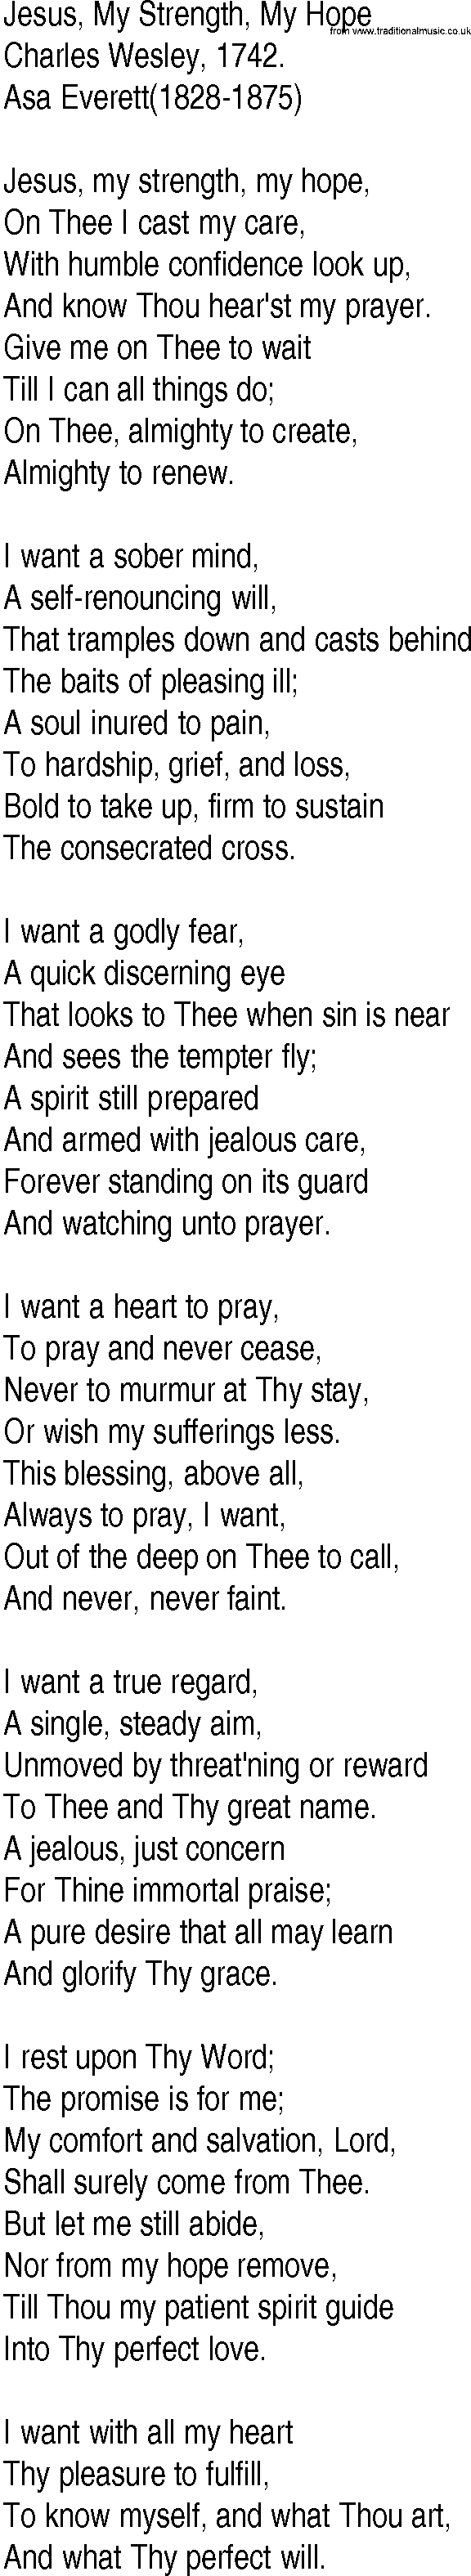 Hymn and Gospel Song: Jesus, My Strength, My Hope by Charles Wesley lyrics